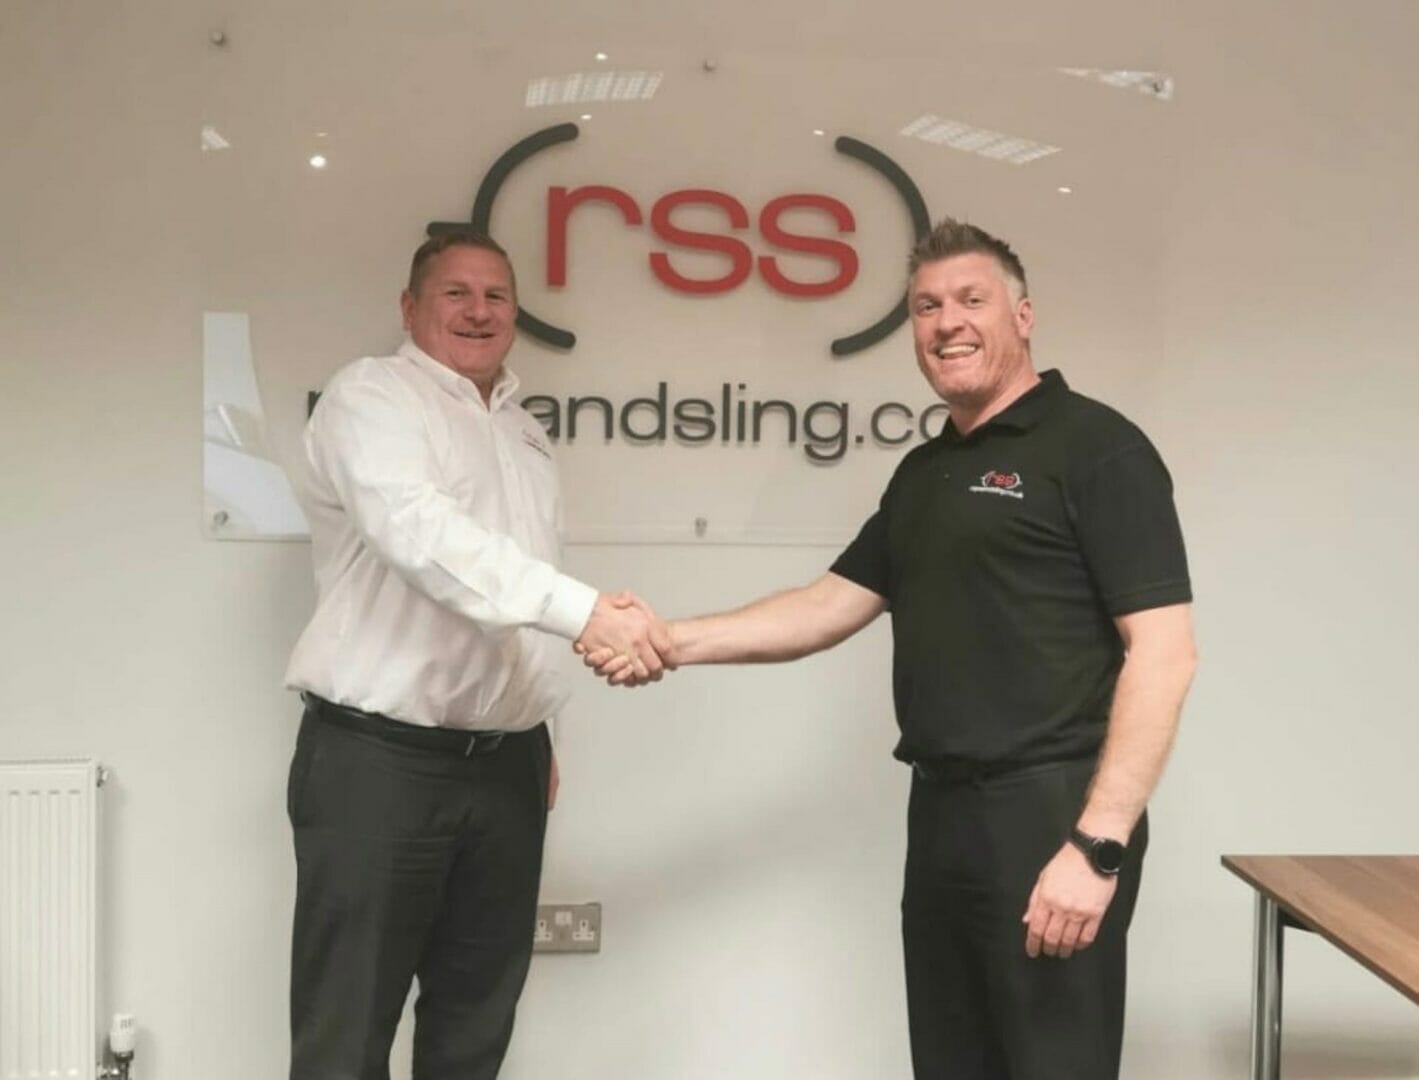 RSS Names Tony Teeder Director @ropeandsling